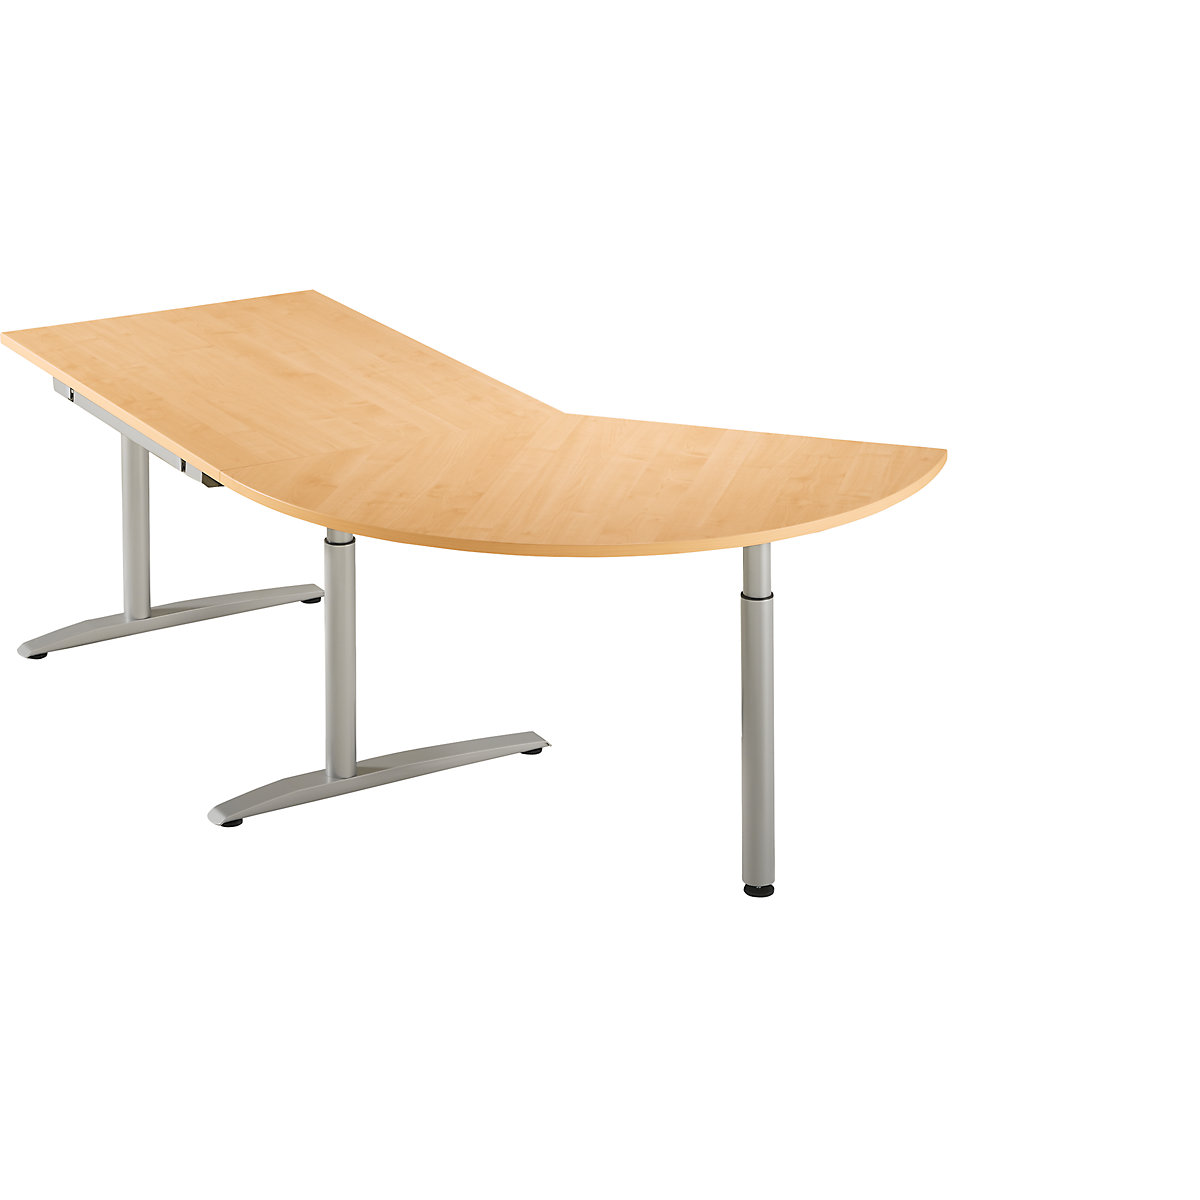 HANNA Priključna miza, nastavitev višine na 650 – 850 mm, 3/8 kroga, z oporno nogo, imitacija bukve